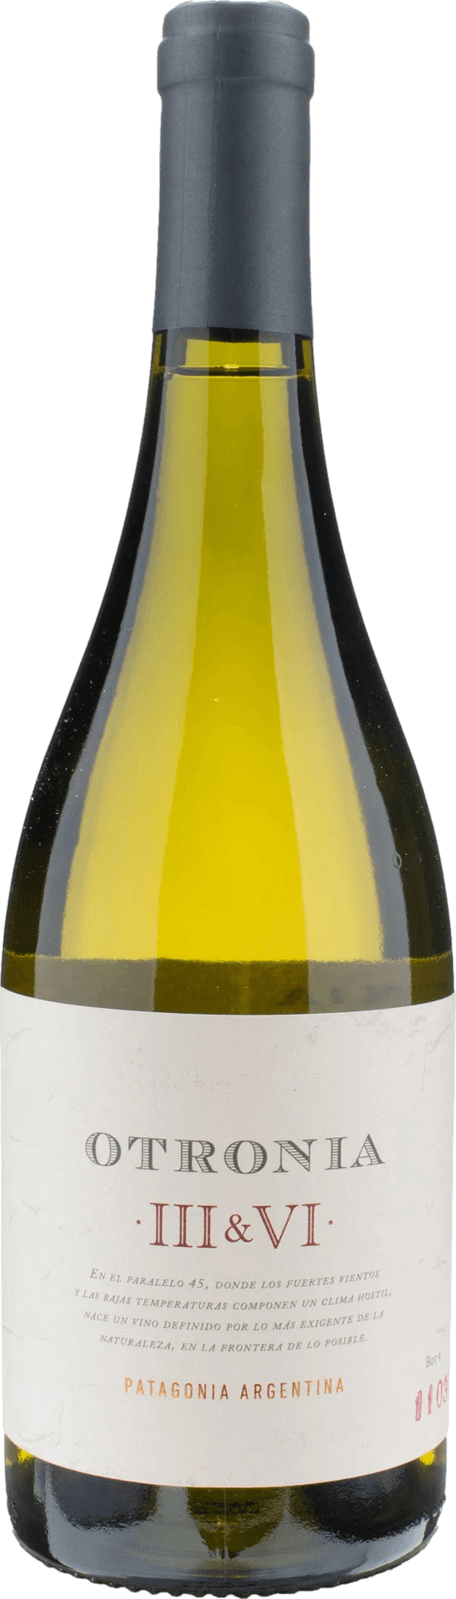 Otronia Block III & VI Chardonnay 2019